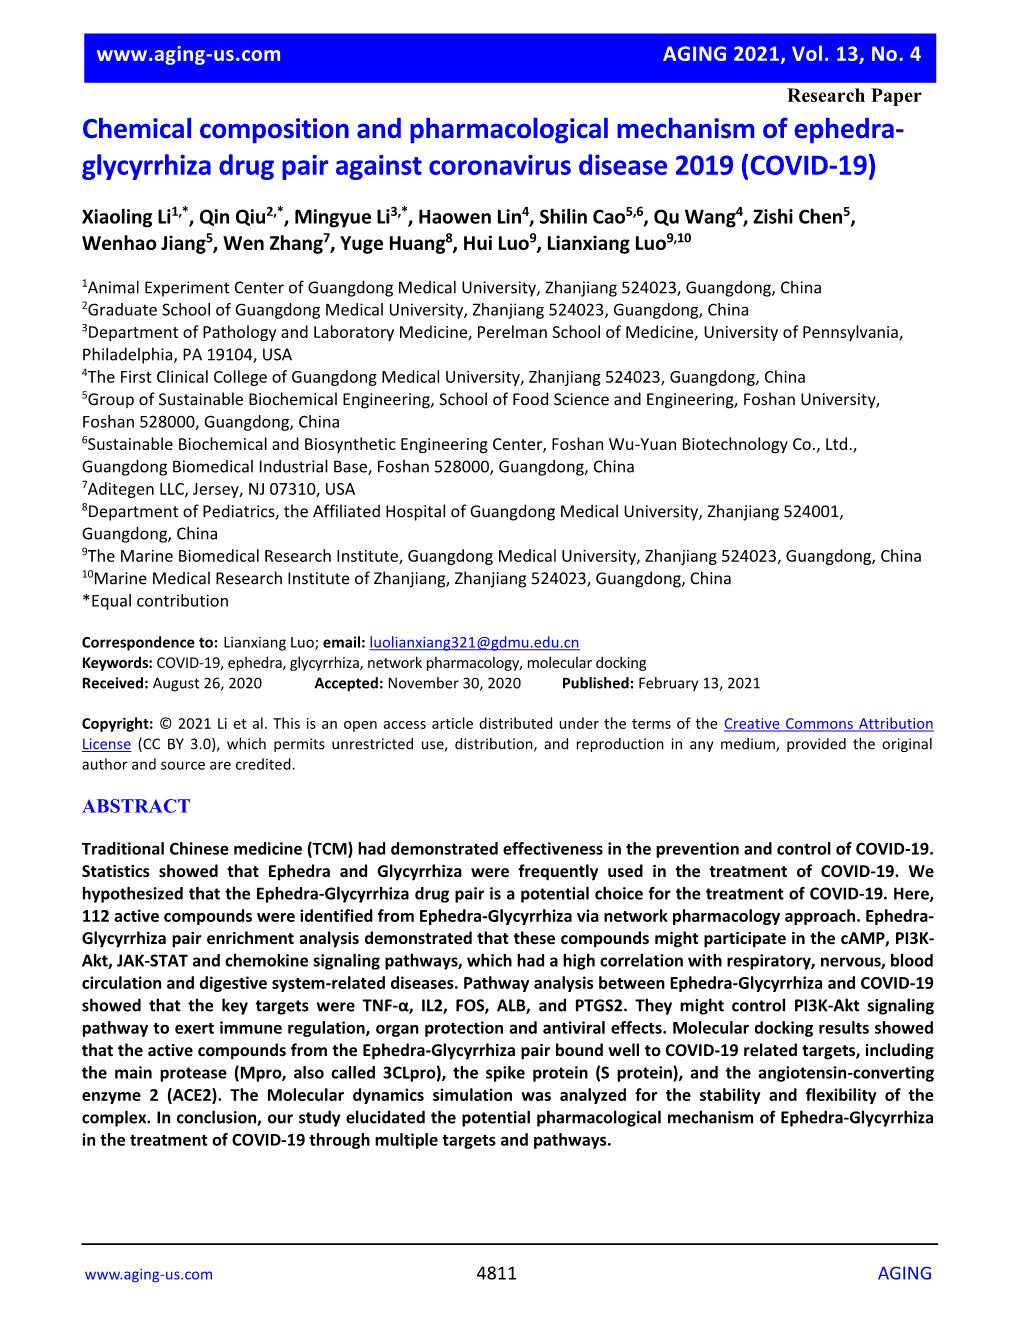 Chemical Composition and Pharmacological Mechanism of Ephedra- Glycyrrhiza Drug Pair Against Coronavirus Disease 2019 (COVID-19)